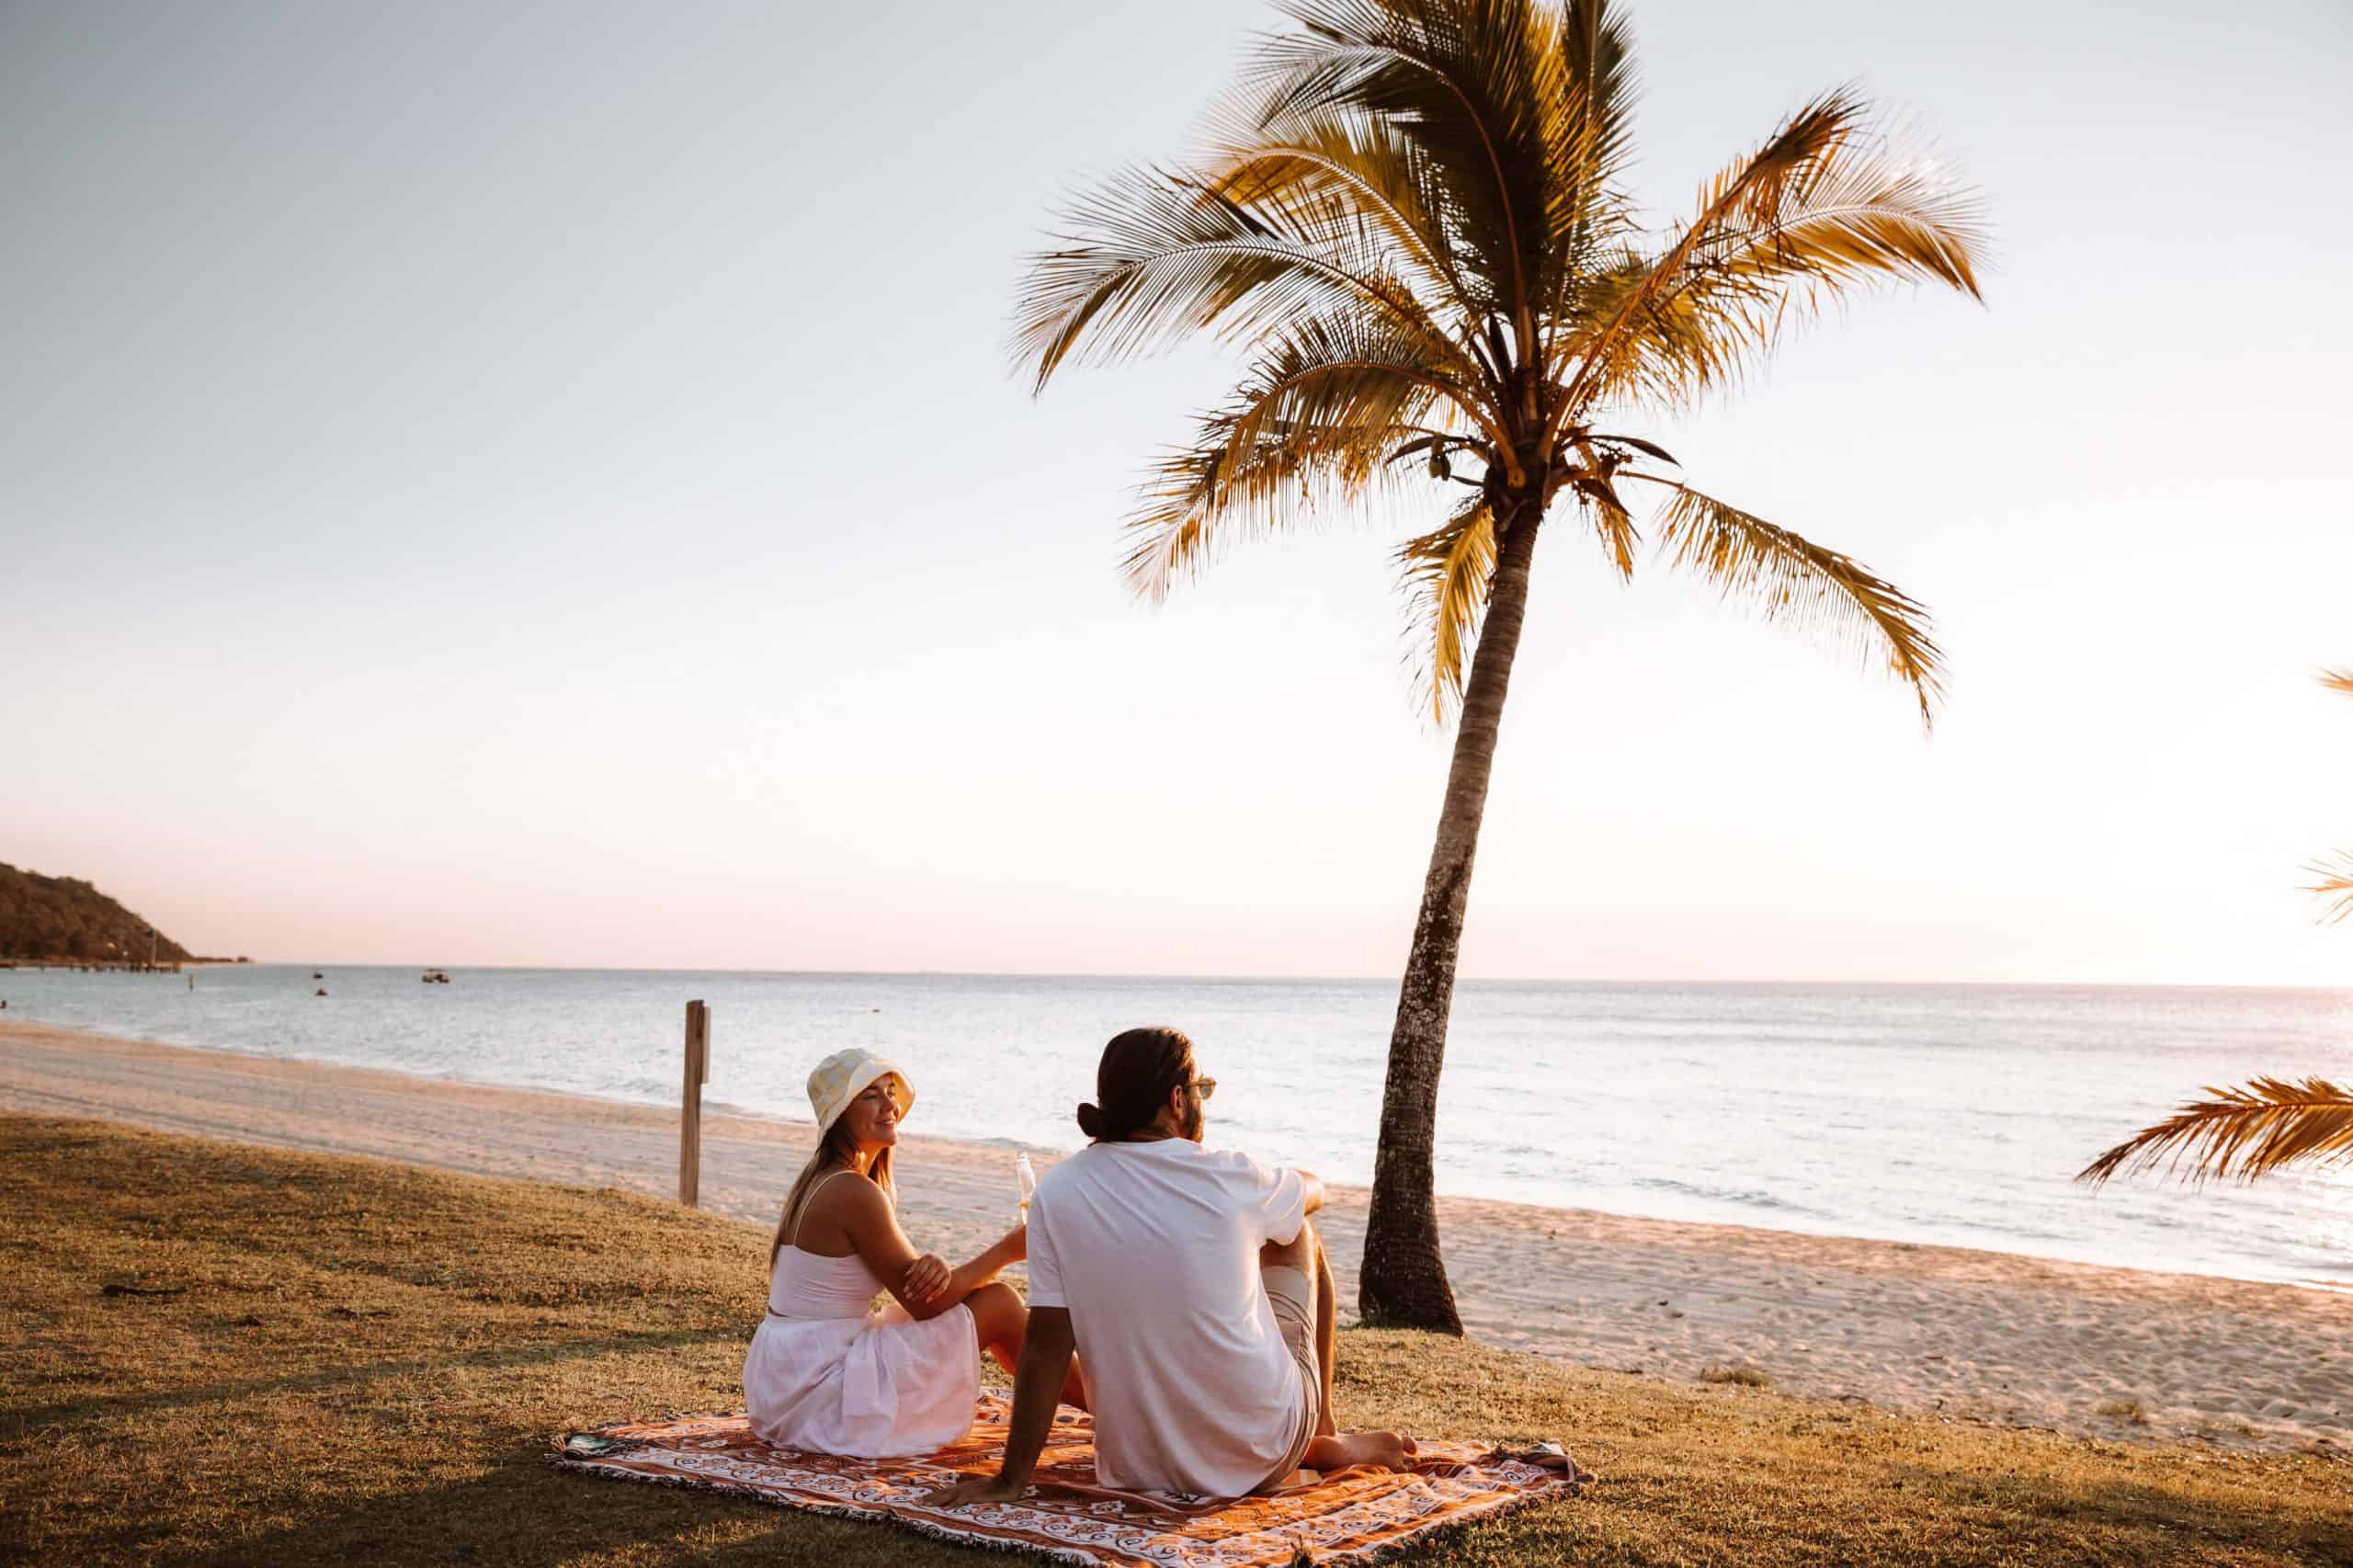 Tangalooma Resort, Moreton Island - couple sitting on the beach or seashore during sunset